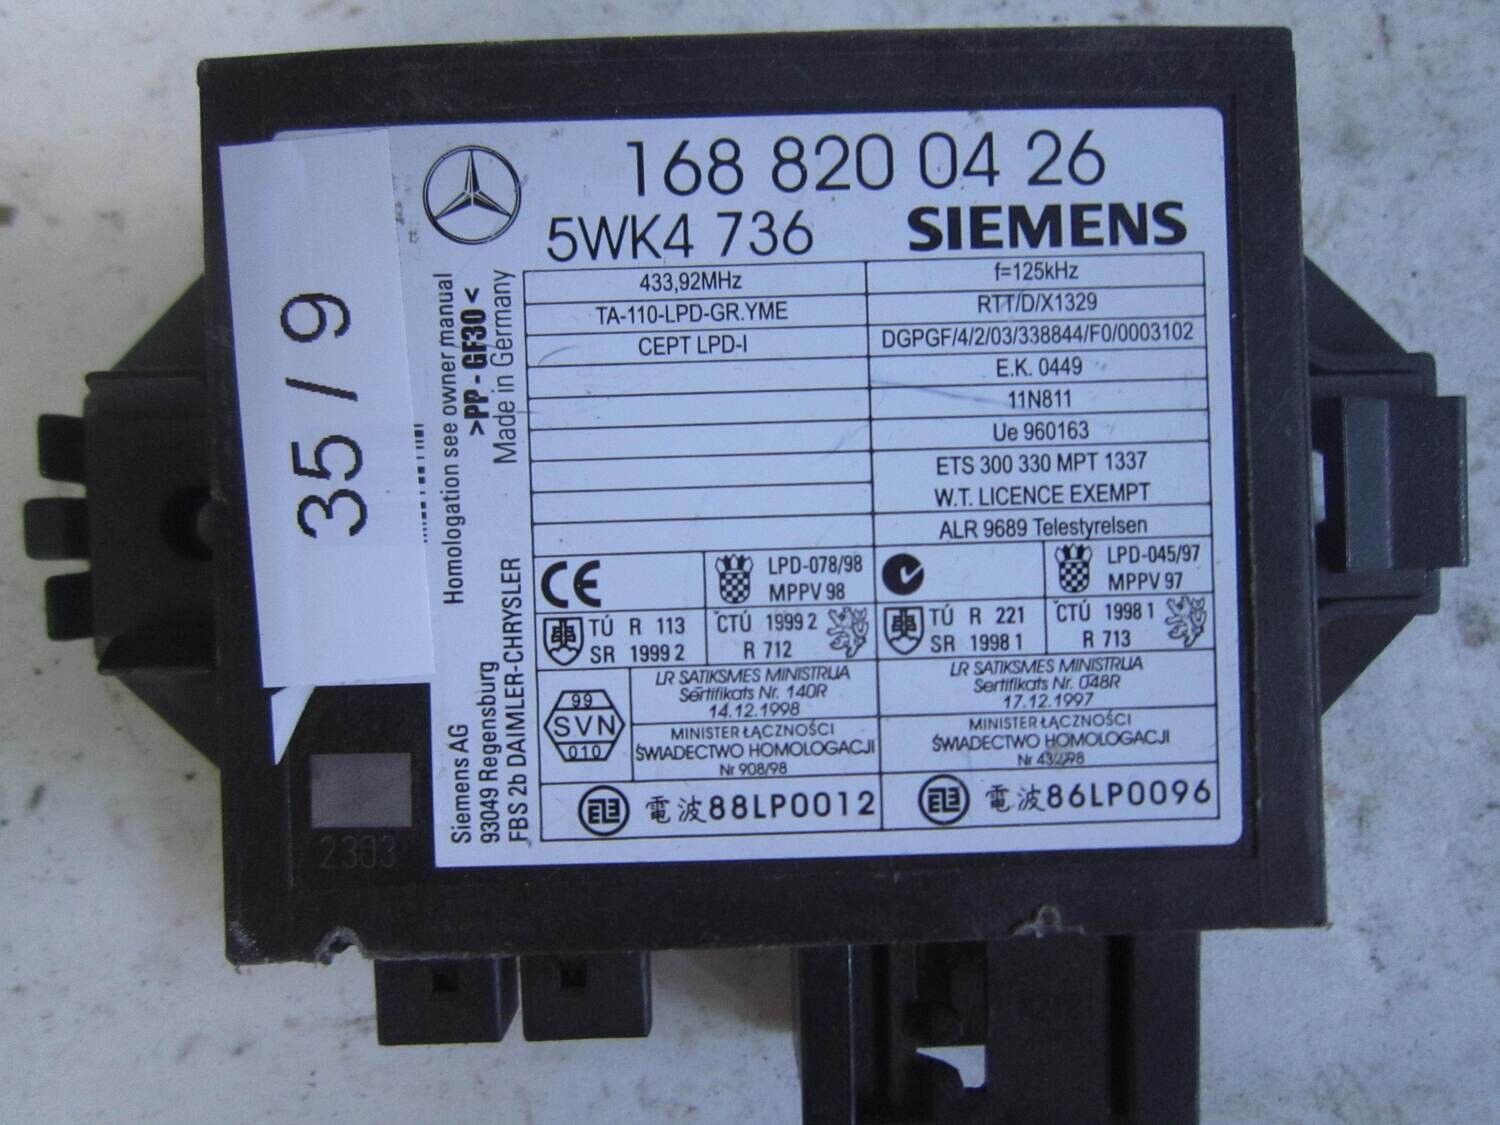 35-9 Centralina Immobilizer Siemens 5WK4 736 5WK4736 168 820 04 26 1688200426 MERCEDES BENZ Generica CLASSE A